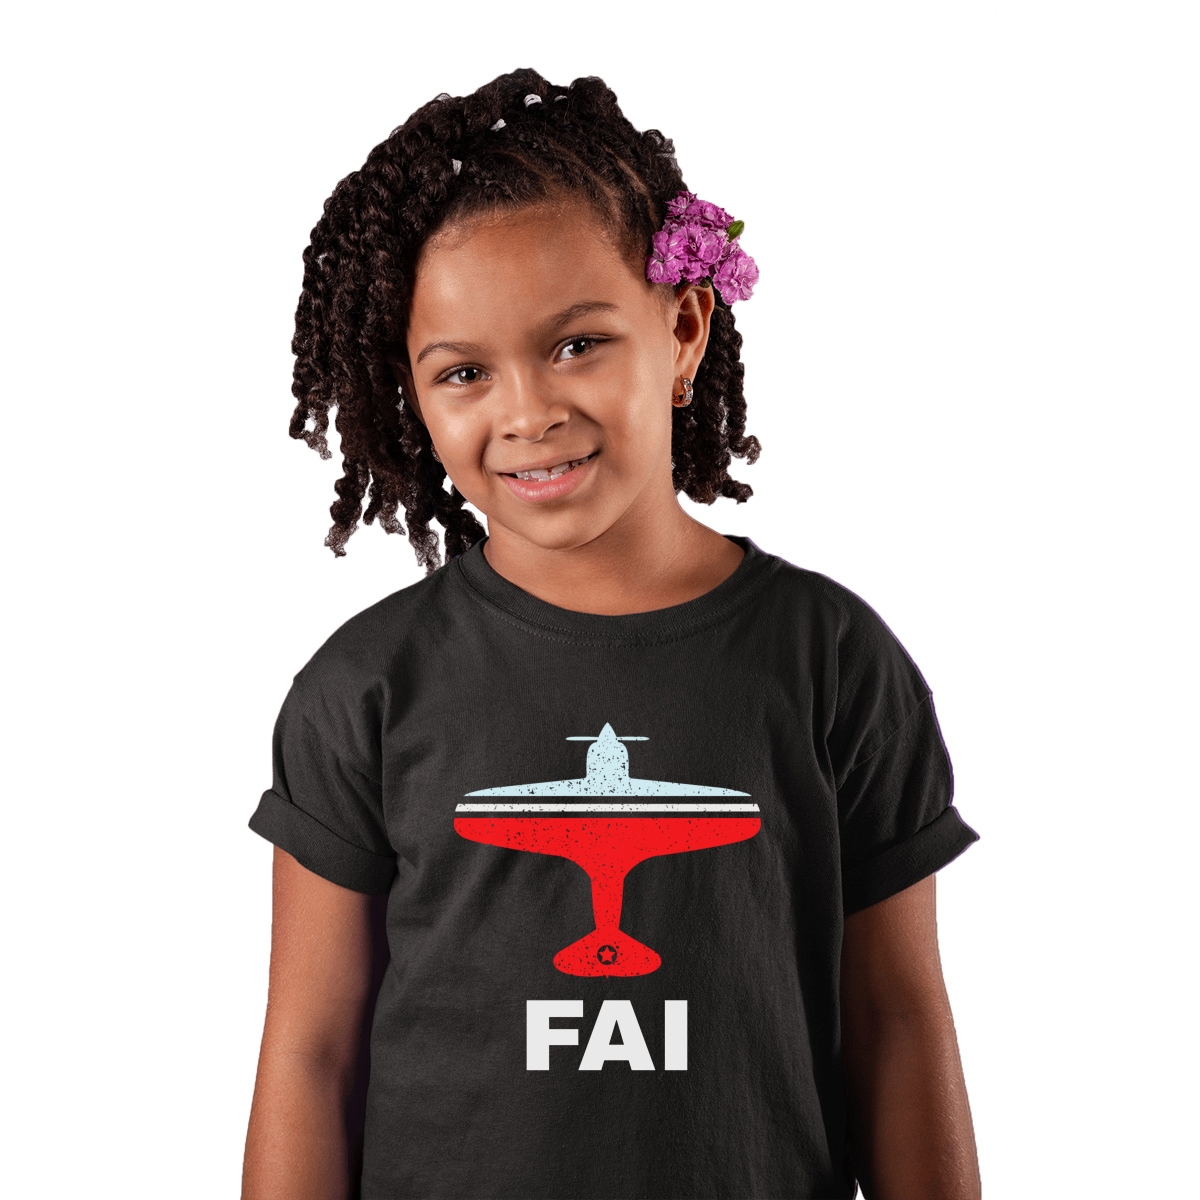 Fly Fairbanks FAI Airport Kids T-shirt | Black